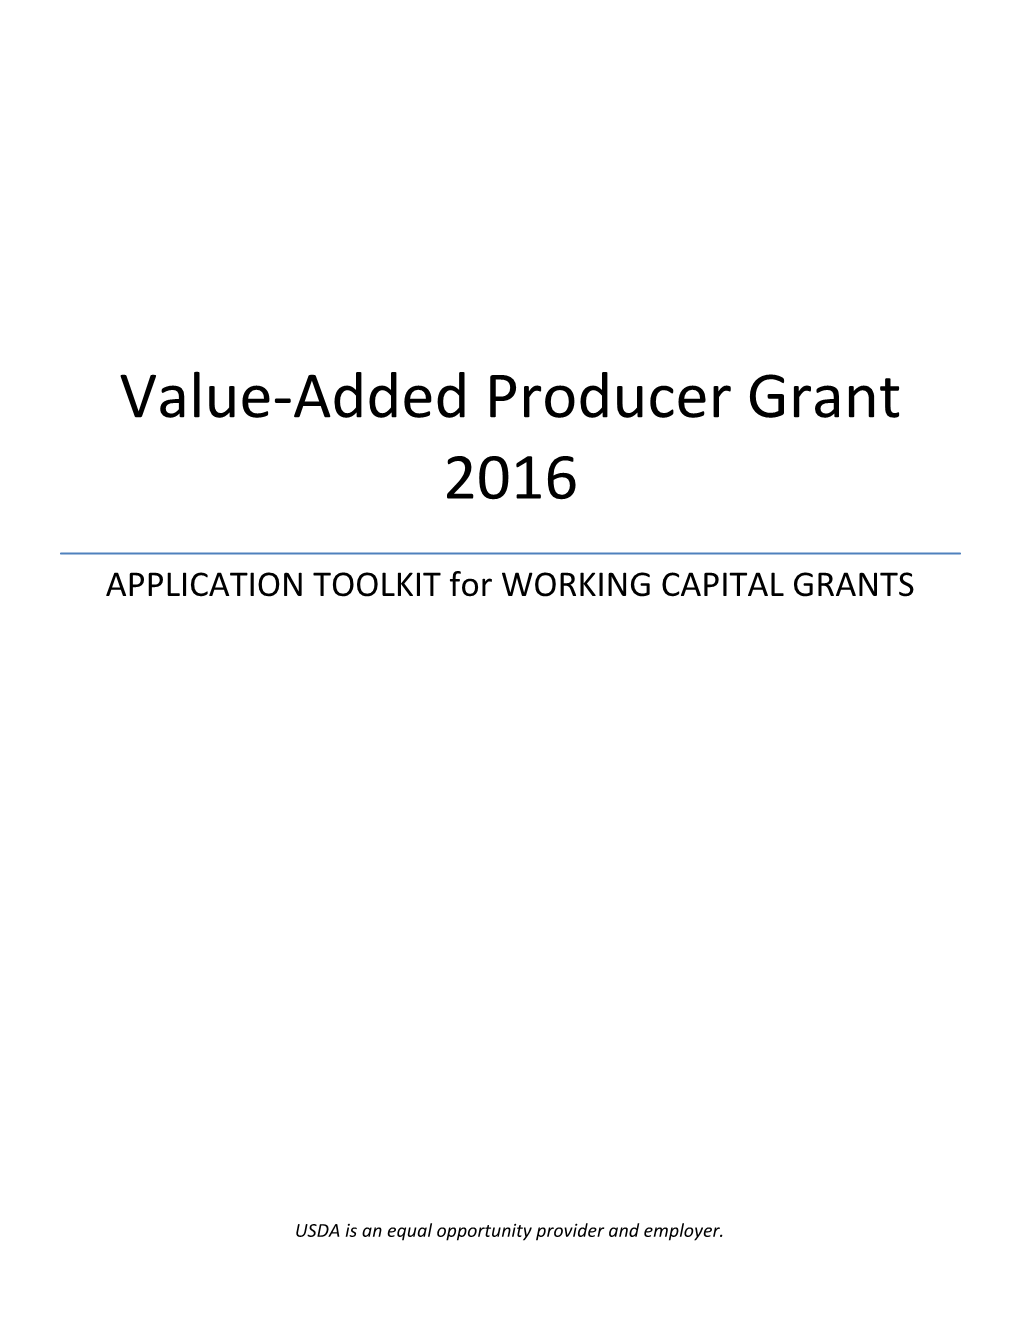 FY2013 Value-Added Producer Grant Program